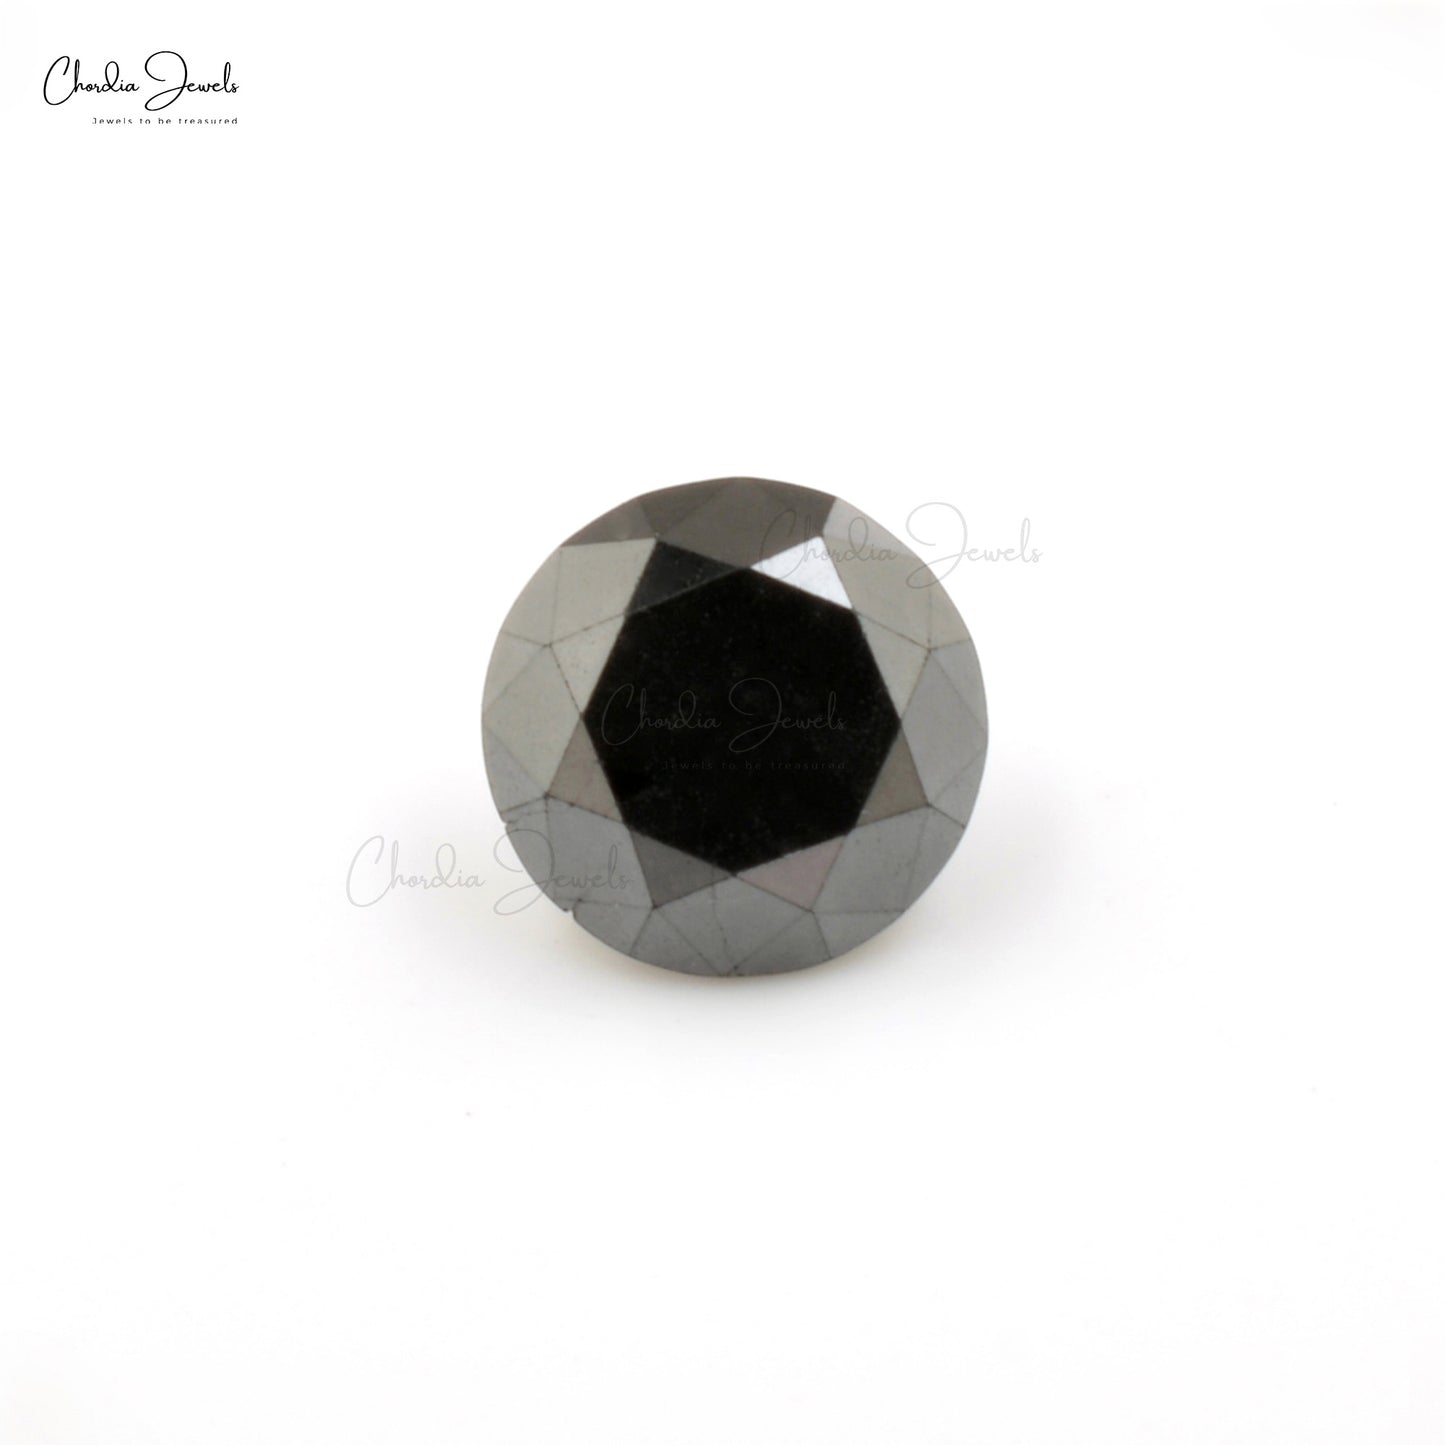 Black Diamond Round Cut Faceted 4 MM Precious Gemstone, 1 Piece